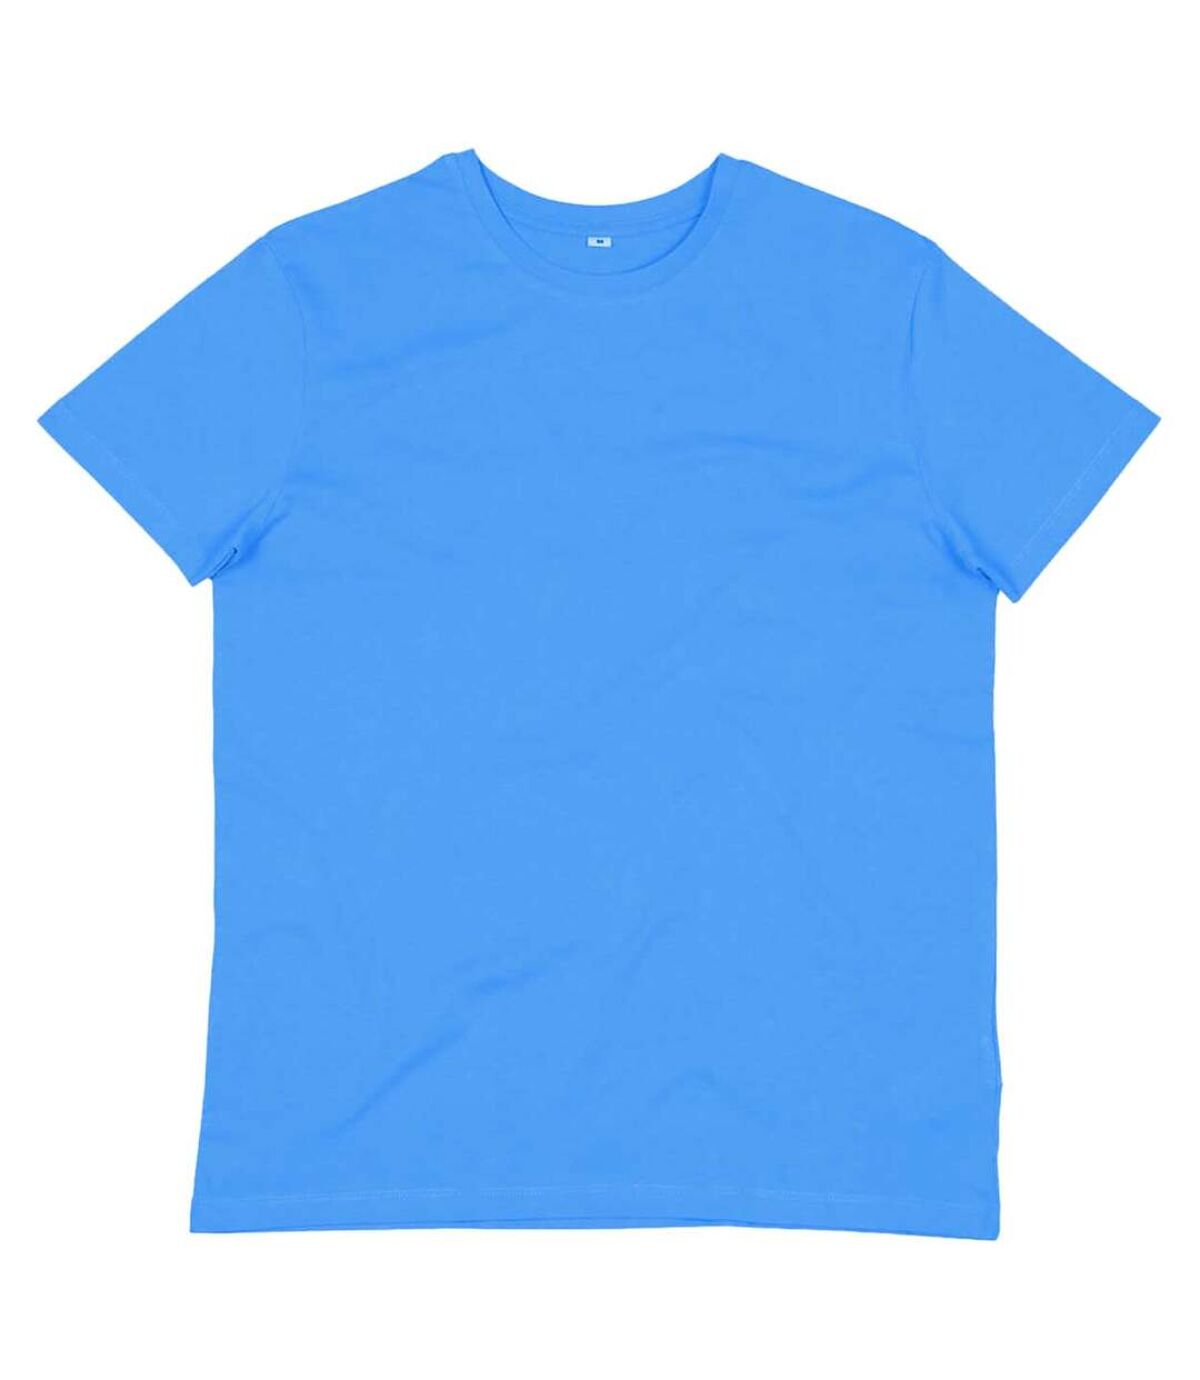 Mantis - T-shirt - Homme (Bleu roi) - UTBC4764